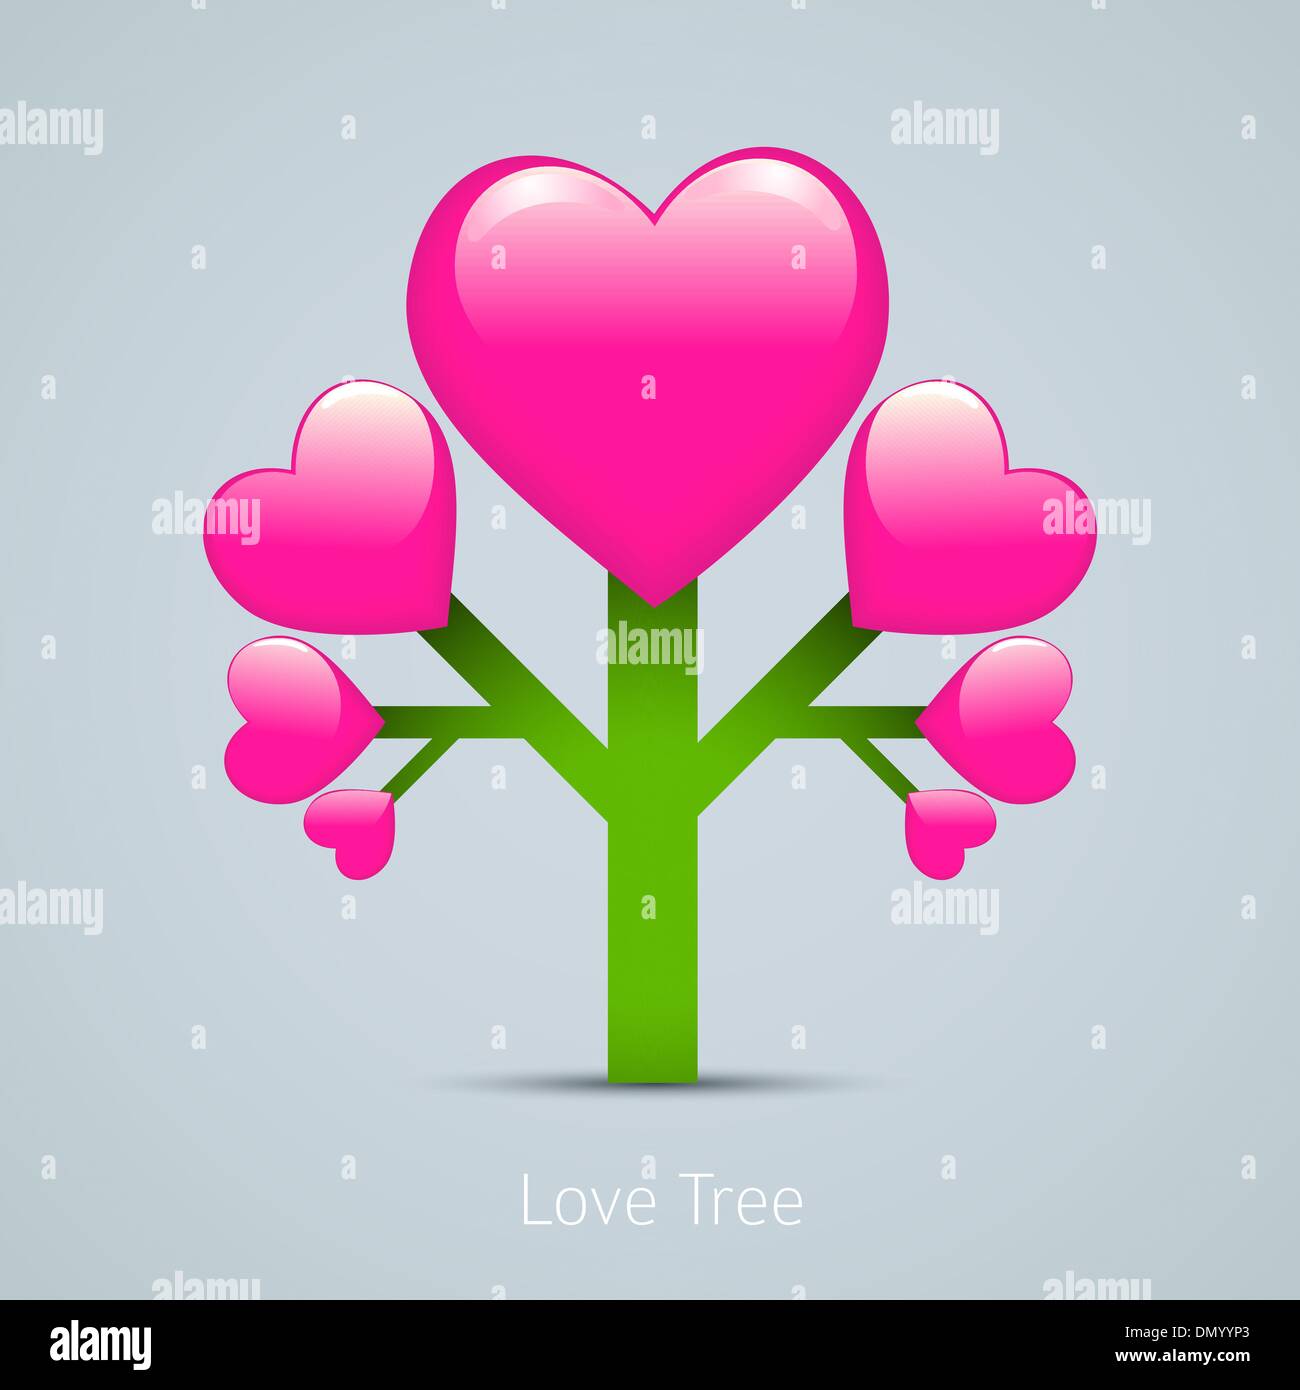 Love creative conceptual design illustration. Tree icon with hea Stock Vector